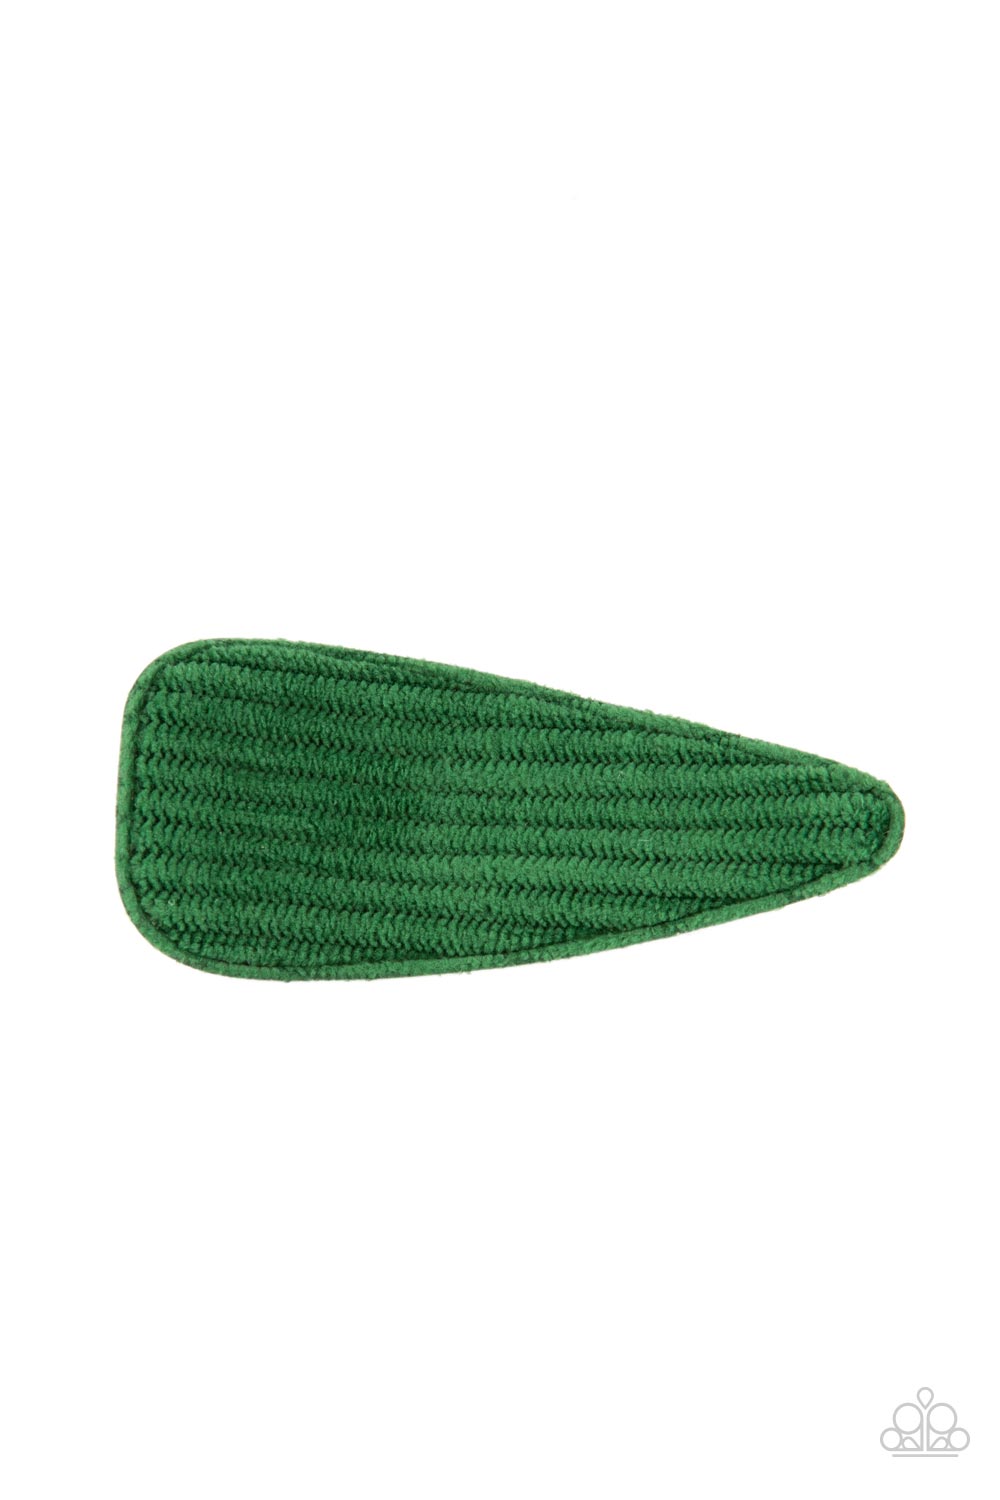 Colorfully Corduroy - green - Paparazzi hair clip